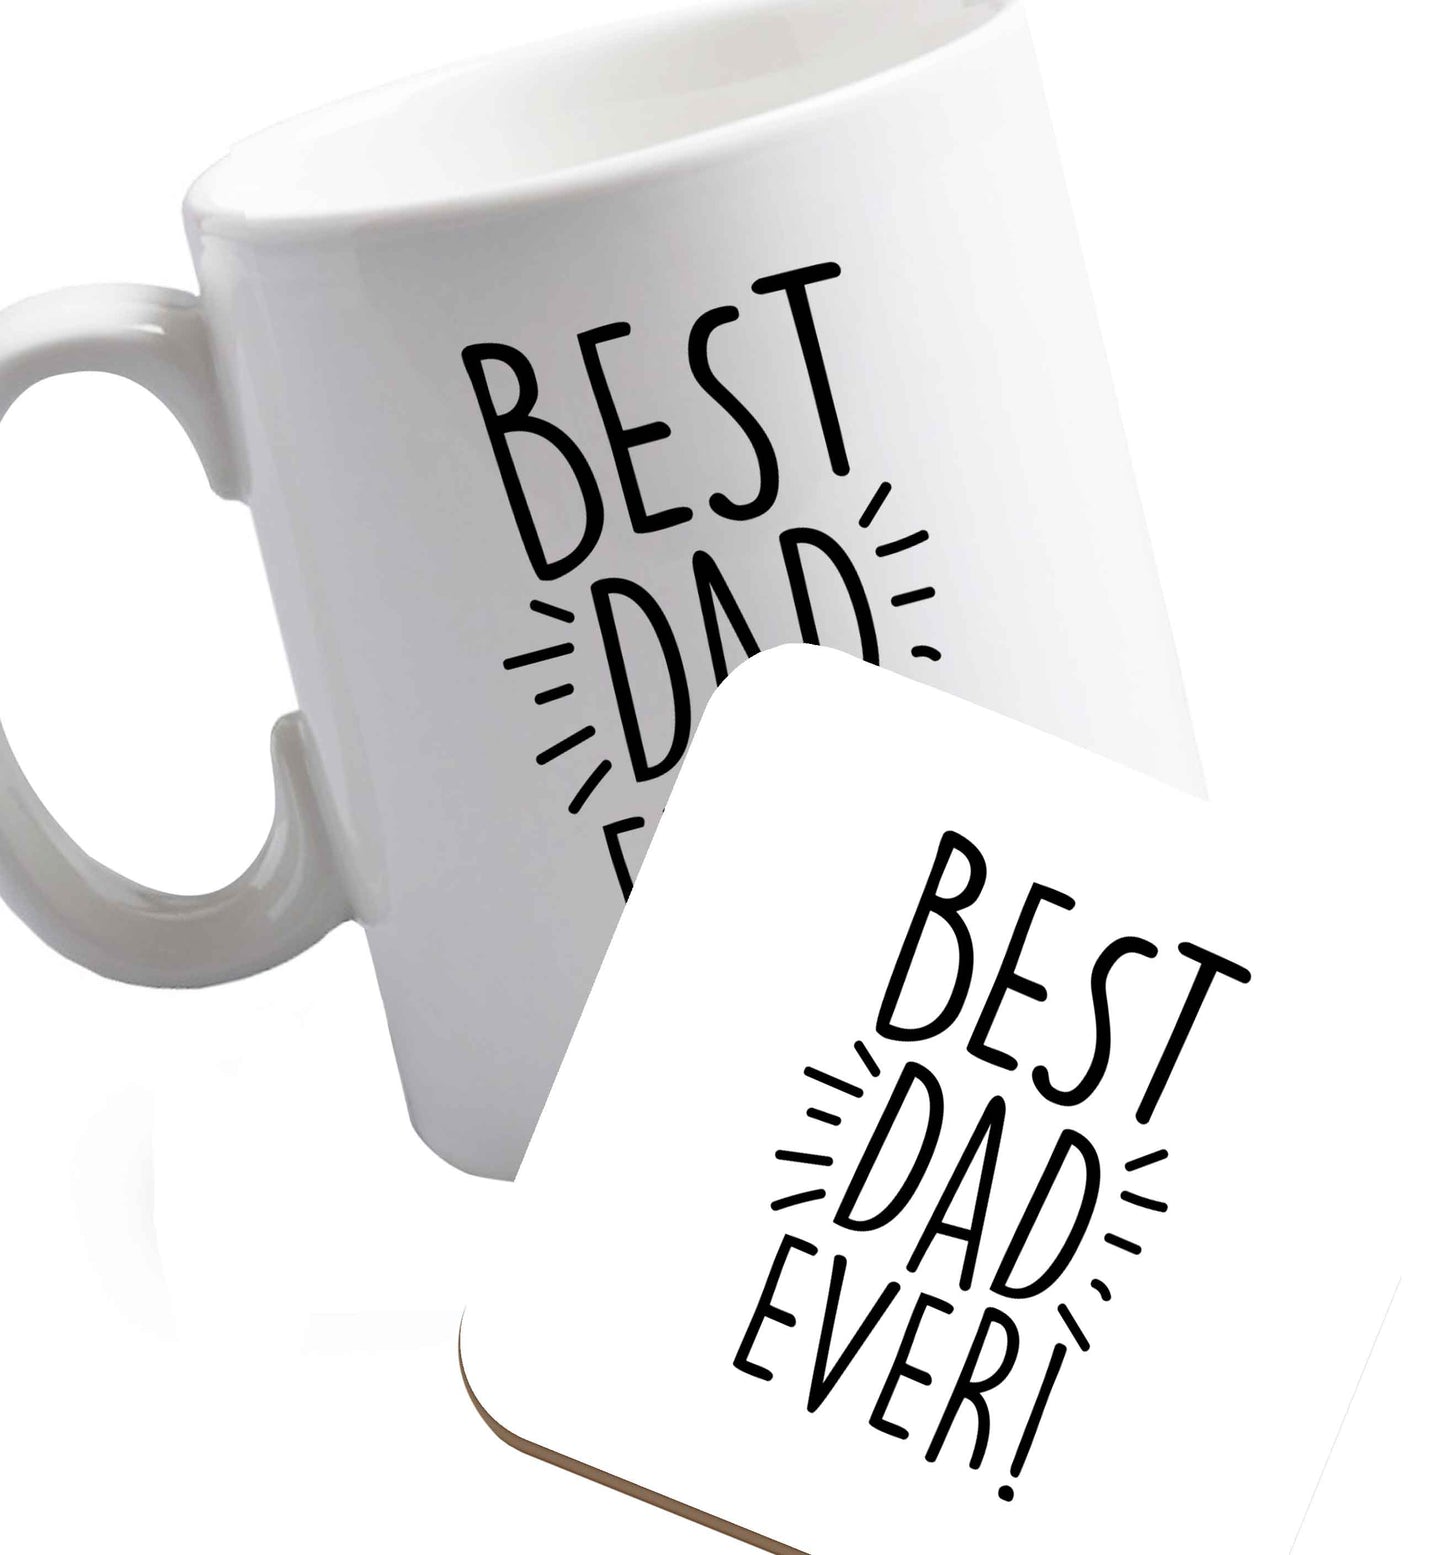 10 oz Best dad ever! ceramic mug and coaster set right handed